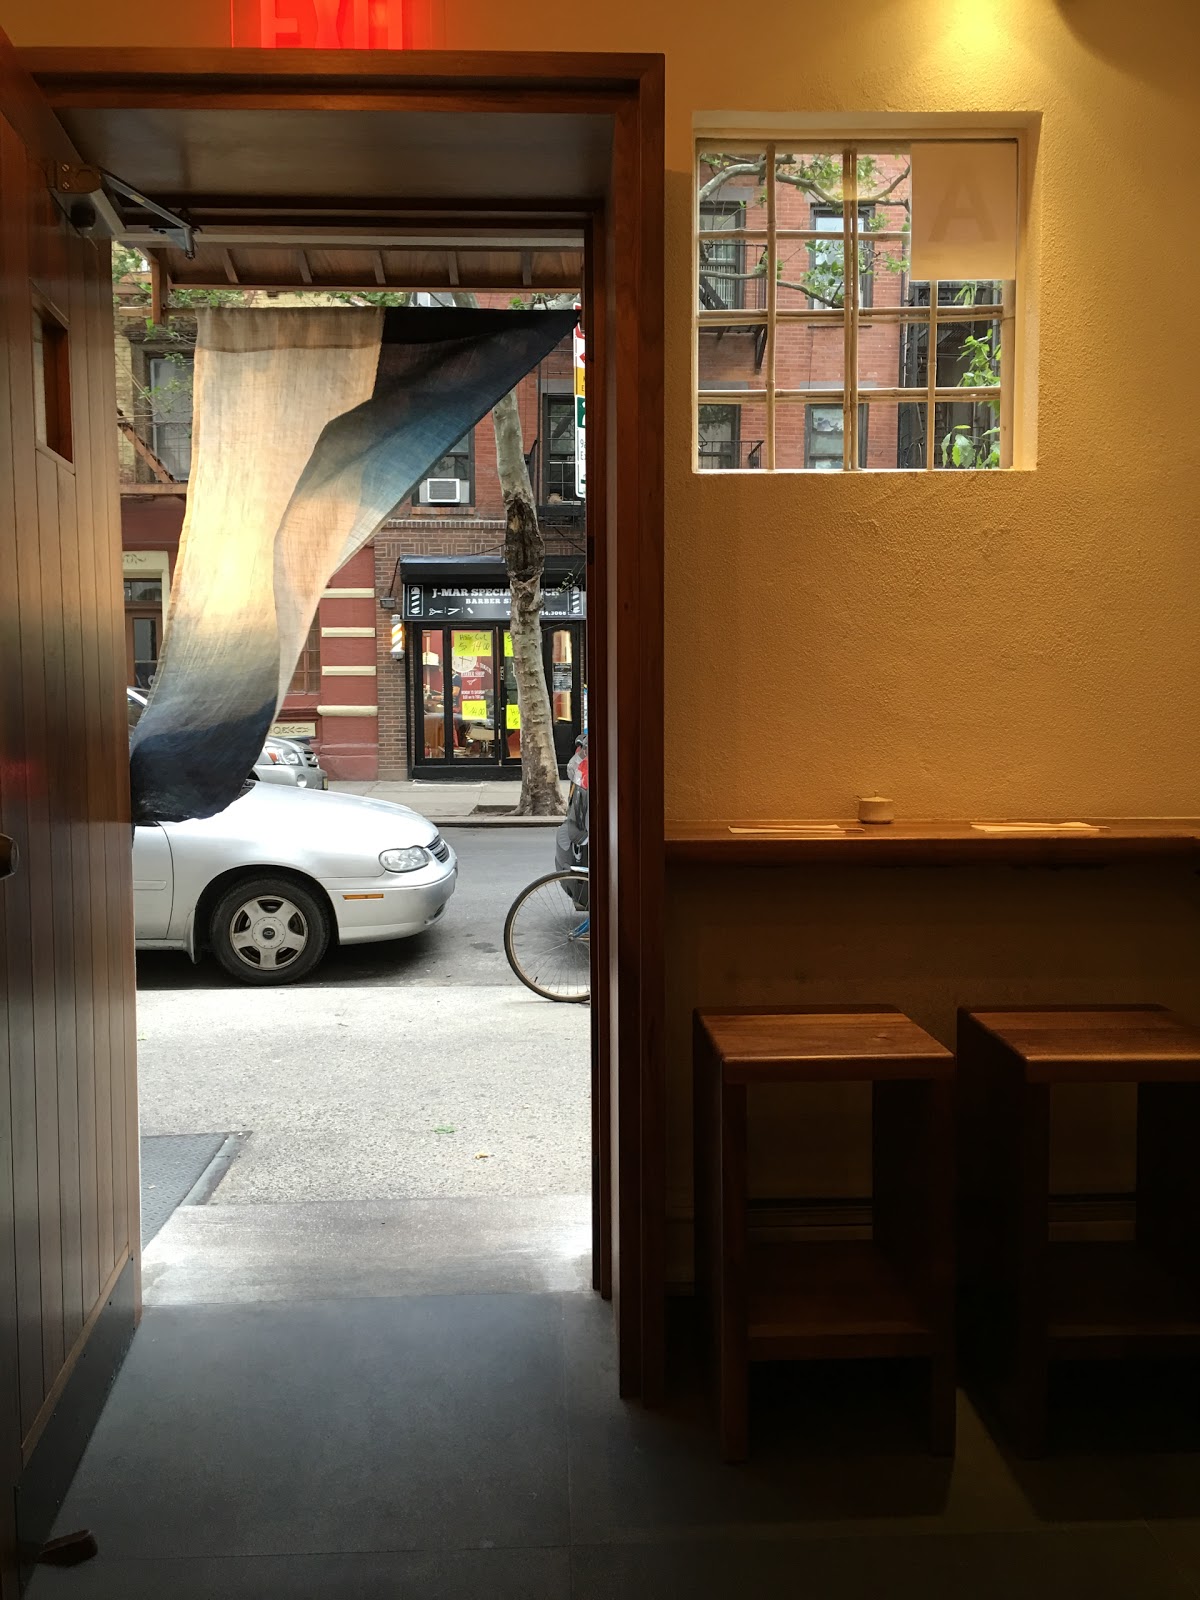 Photo of Raku in New York City, New York, United States - 4 Picture of Restaurant, Food, Point of interest, Establishment